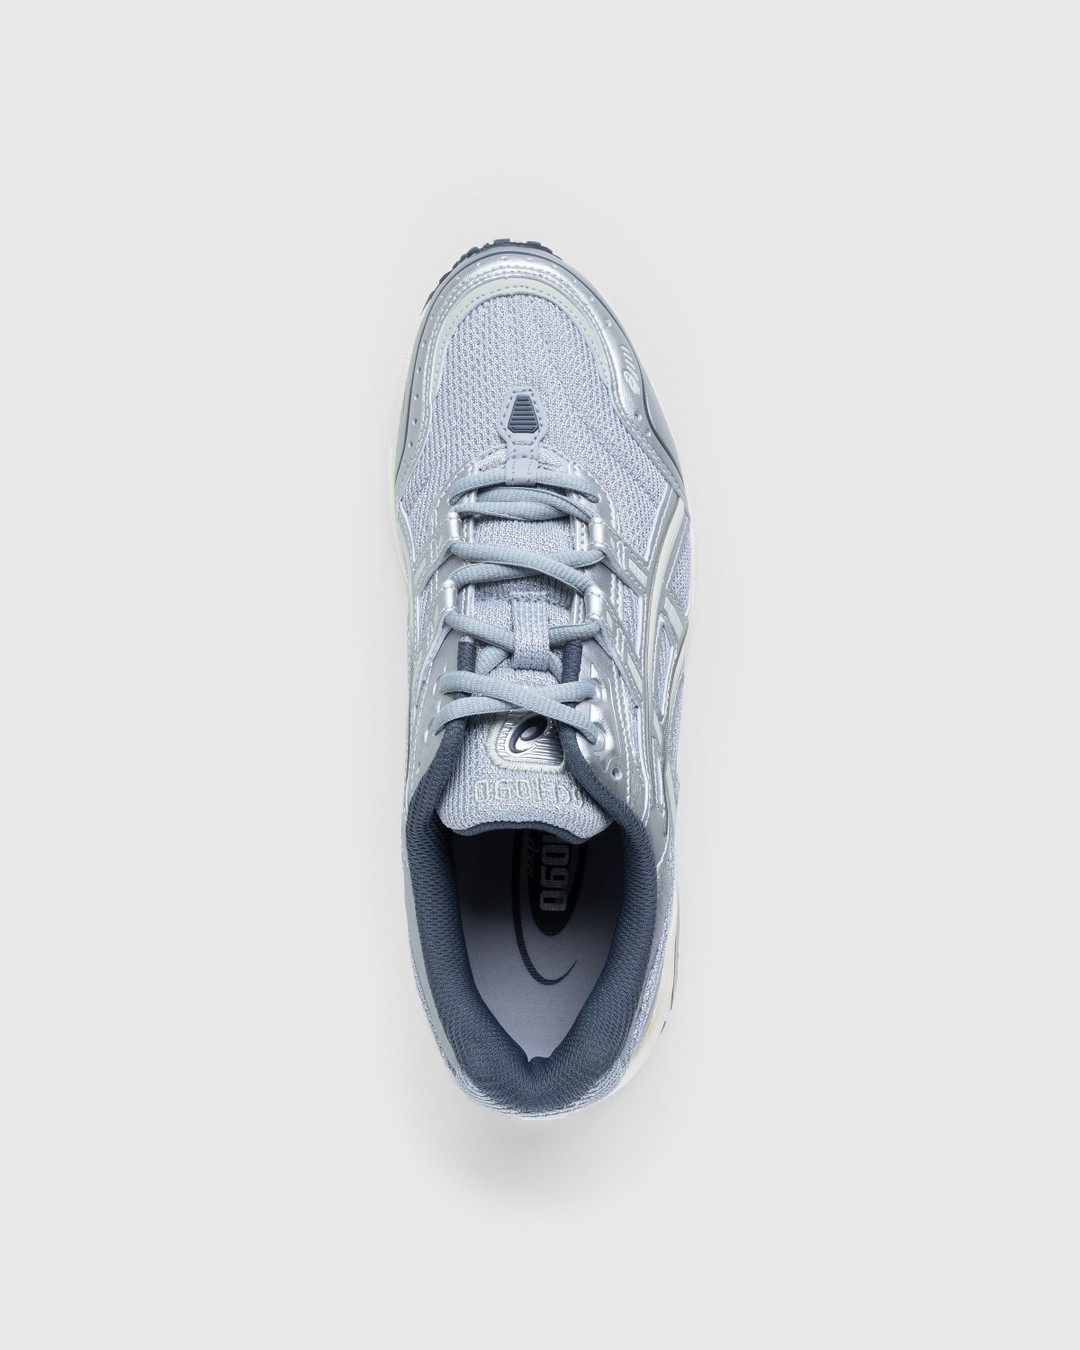 asics – GEL-1090 Piedmont Gray/Tarmac - Sneakers - Grey - Image 5